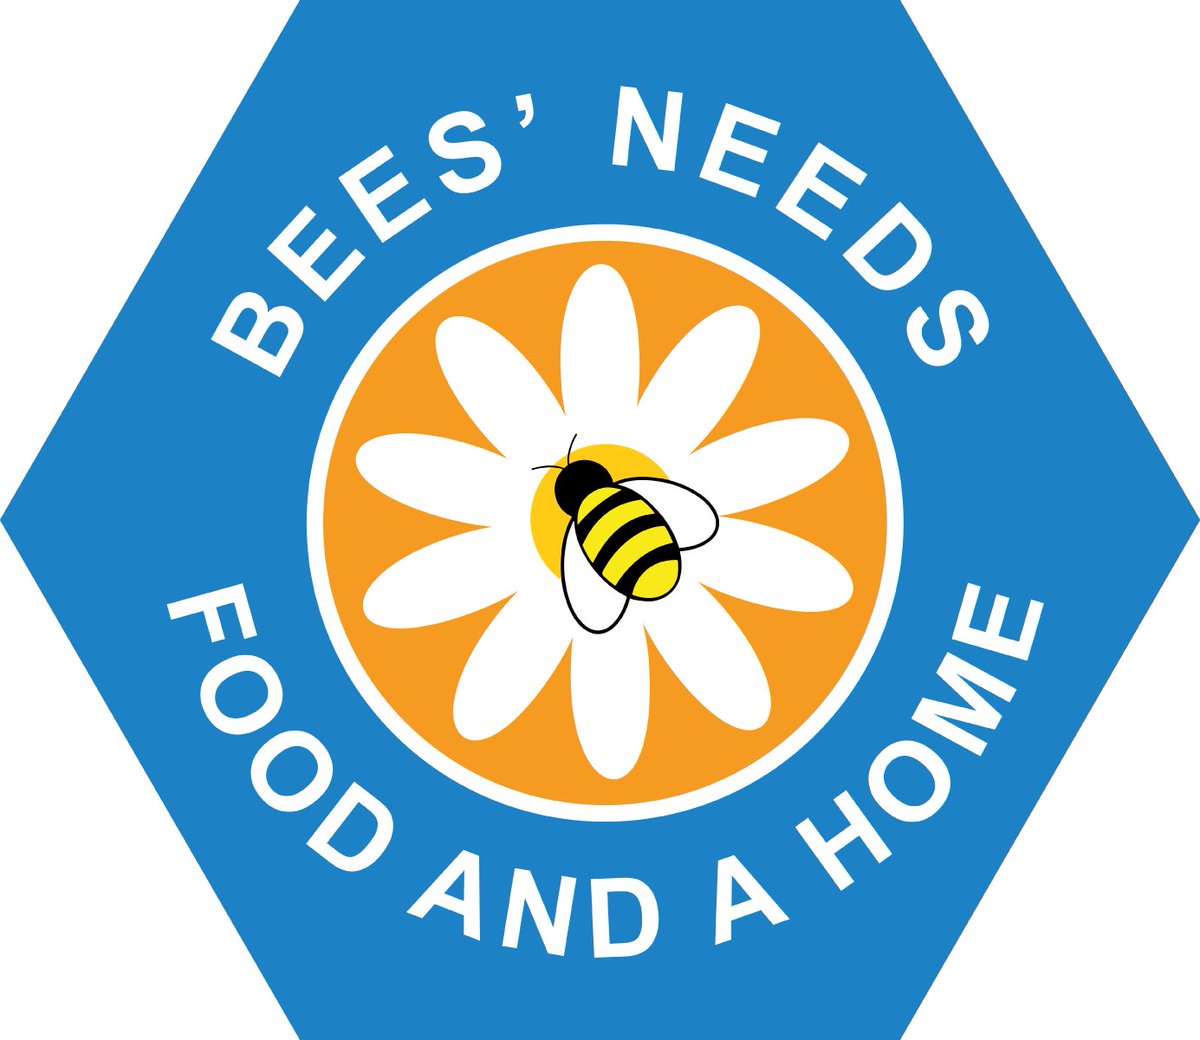 It's #BeesNeedsWeek - here's how you can help provide a better environment for pollinators in your garden. #bees #beekeeping #gardening #pollinators bit.ly/3XNPkHt